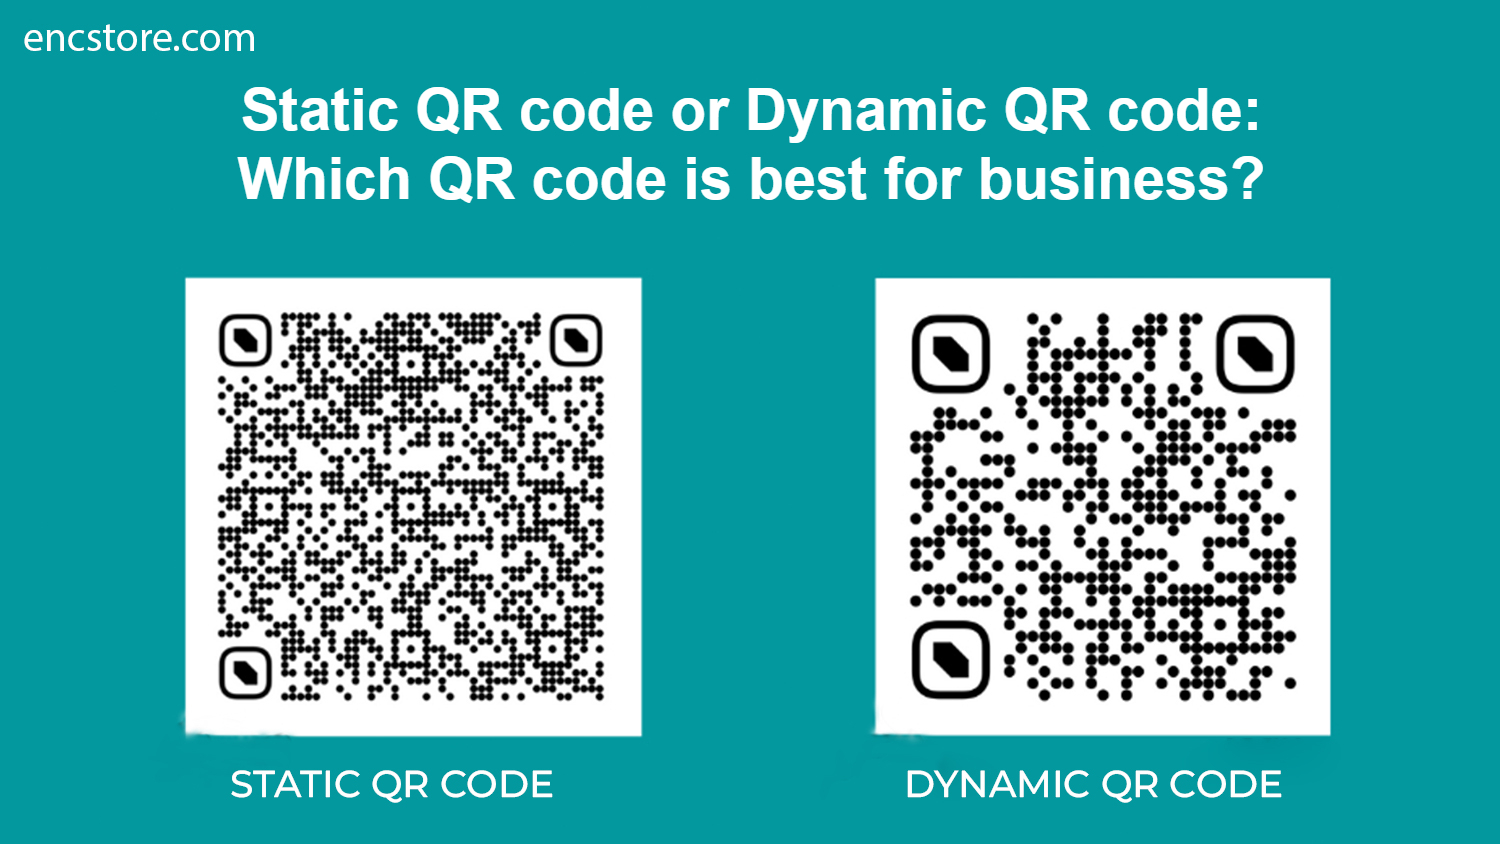 Static QR code or Dynamic QR code